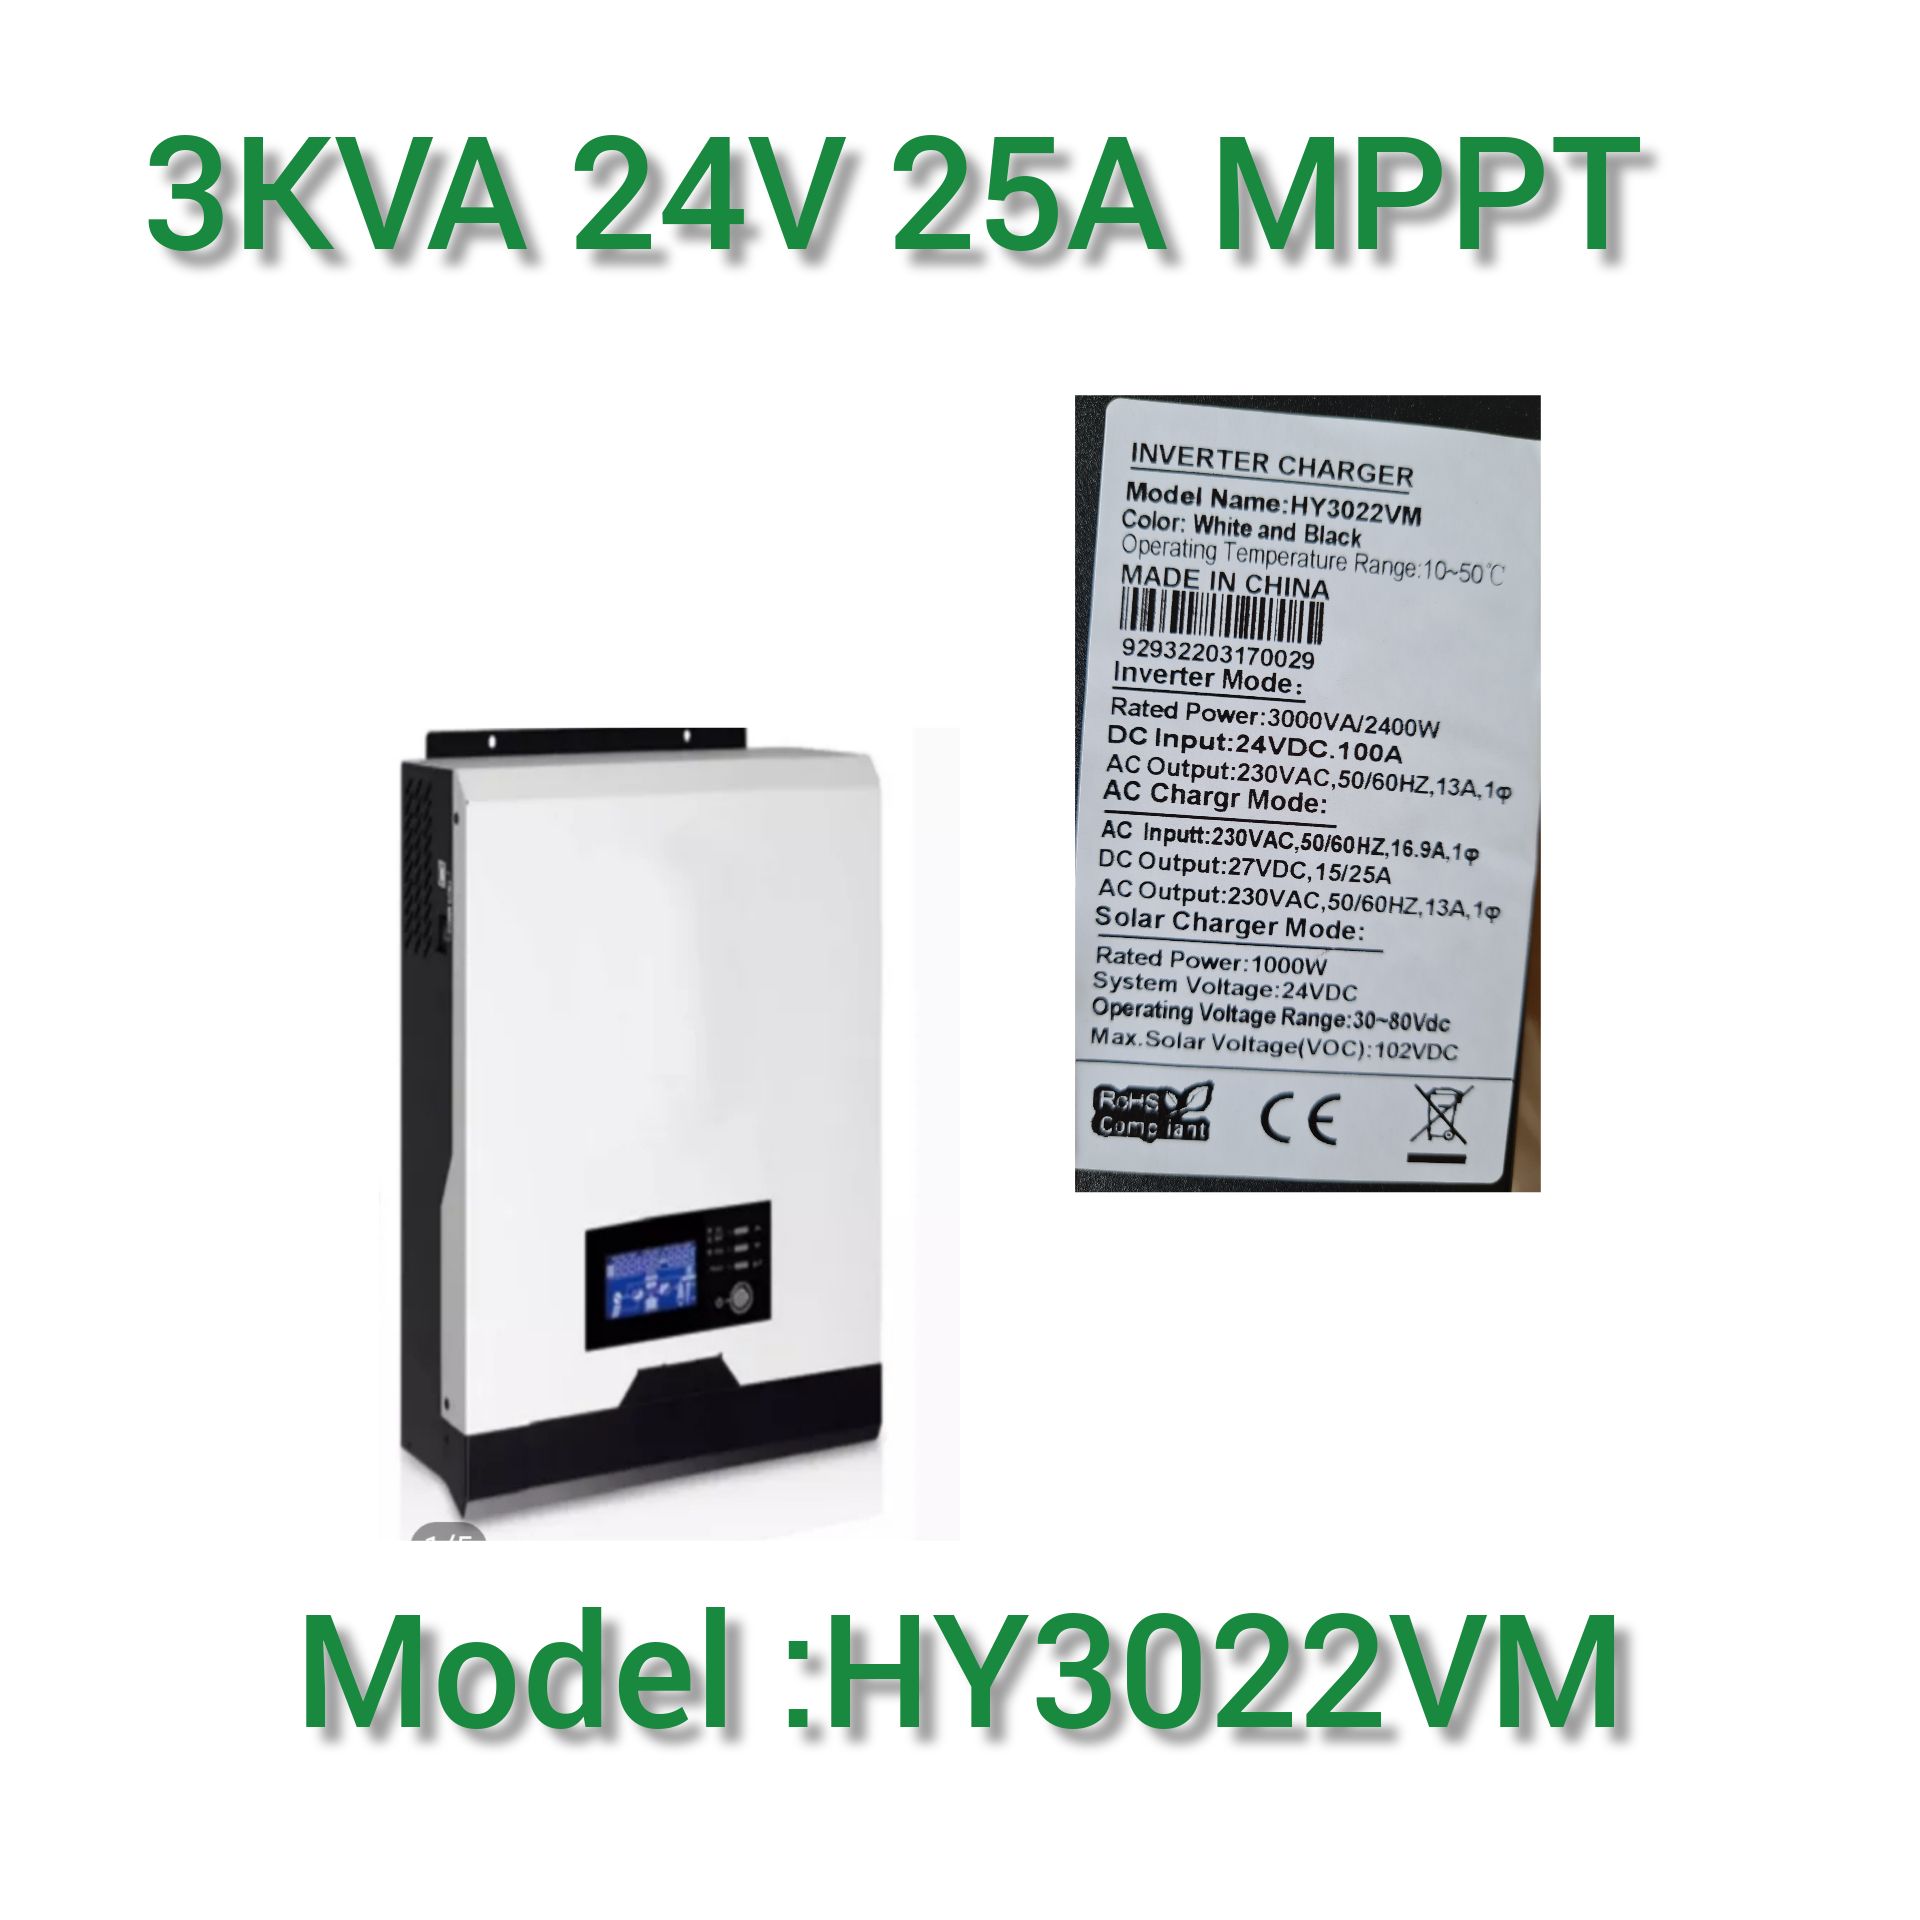 3KVA Solar Hybrid Inverter 24V 220VAC 50A PWM model: HY3022P / 3kva24v25A  mppt model: HY3022VM